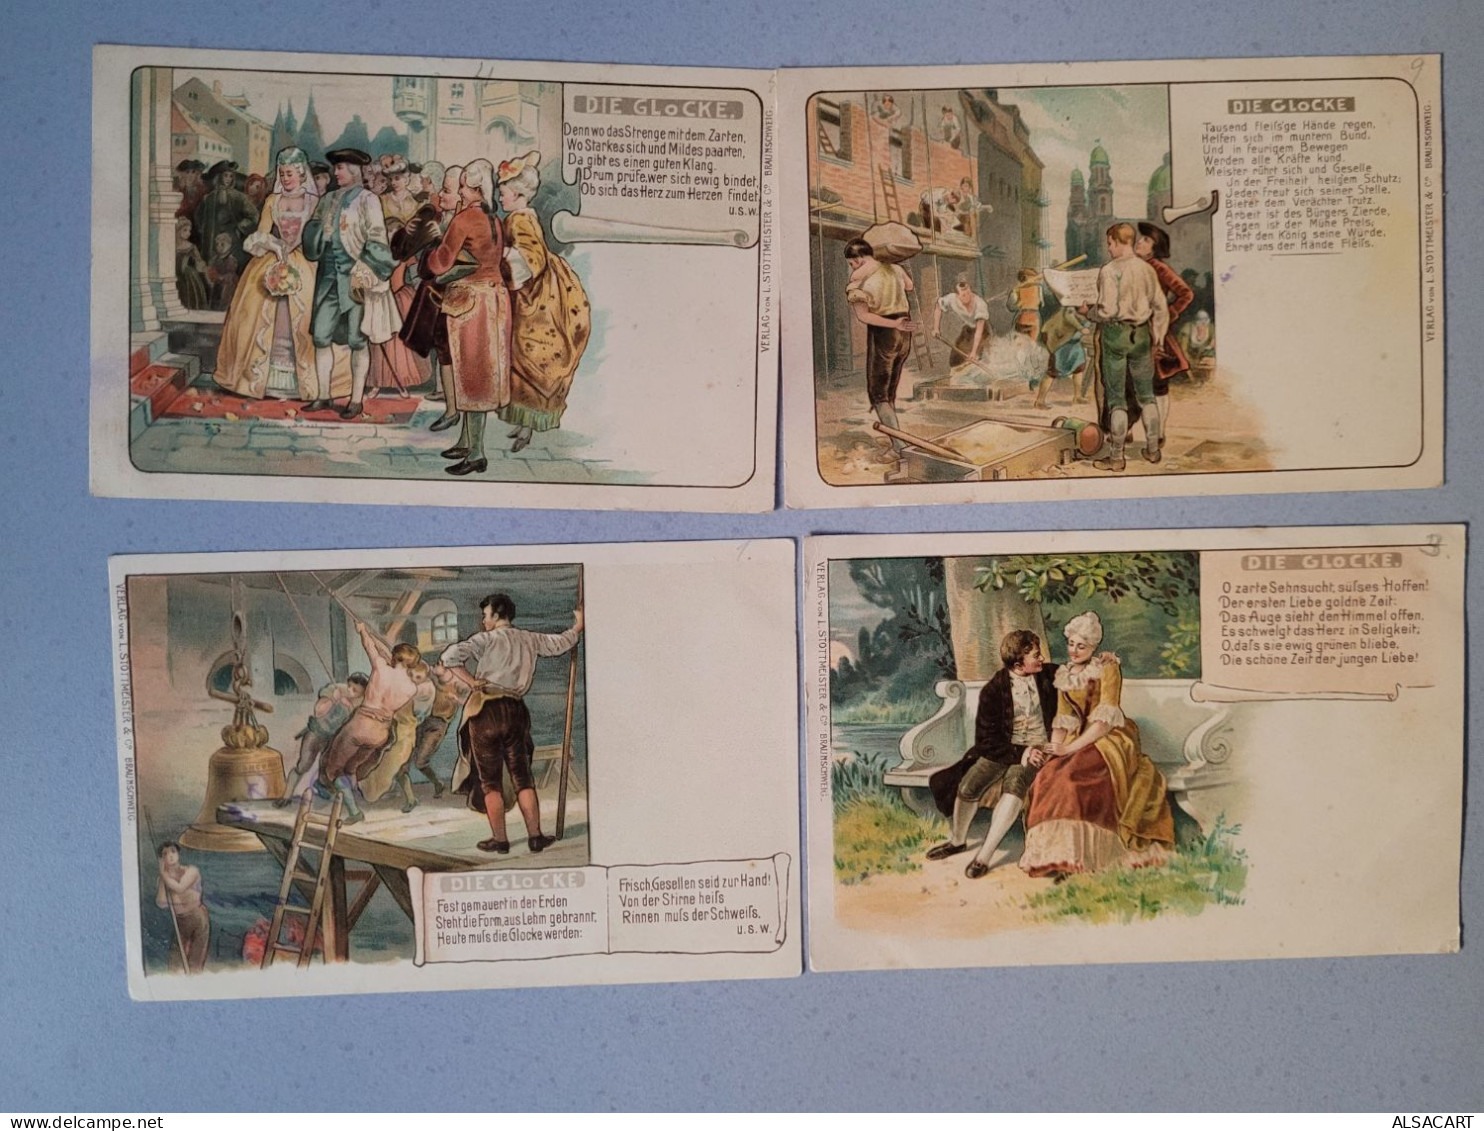 Lot De 10 Cartes 1900 Illustrateur , Die Glocke  , Hongrie? - Unclassified